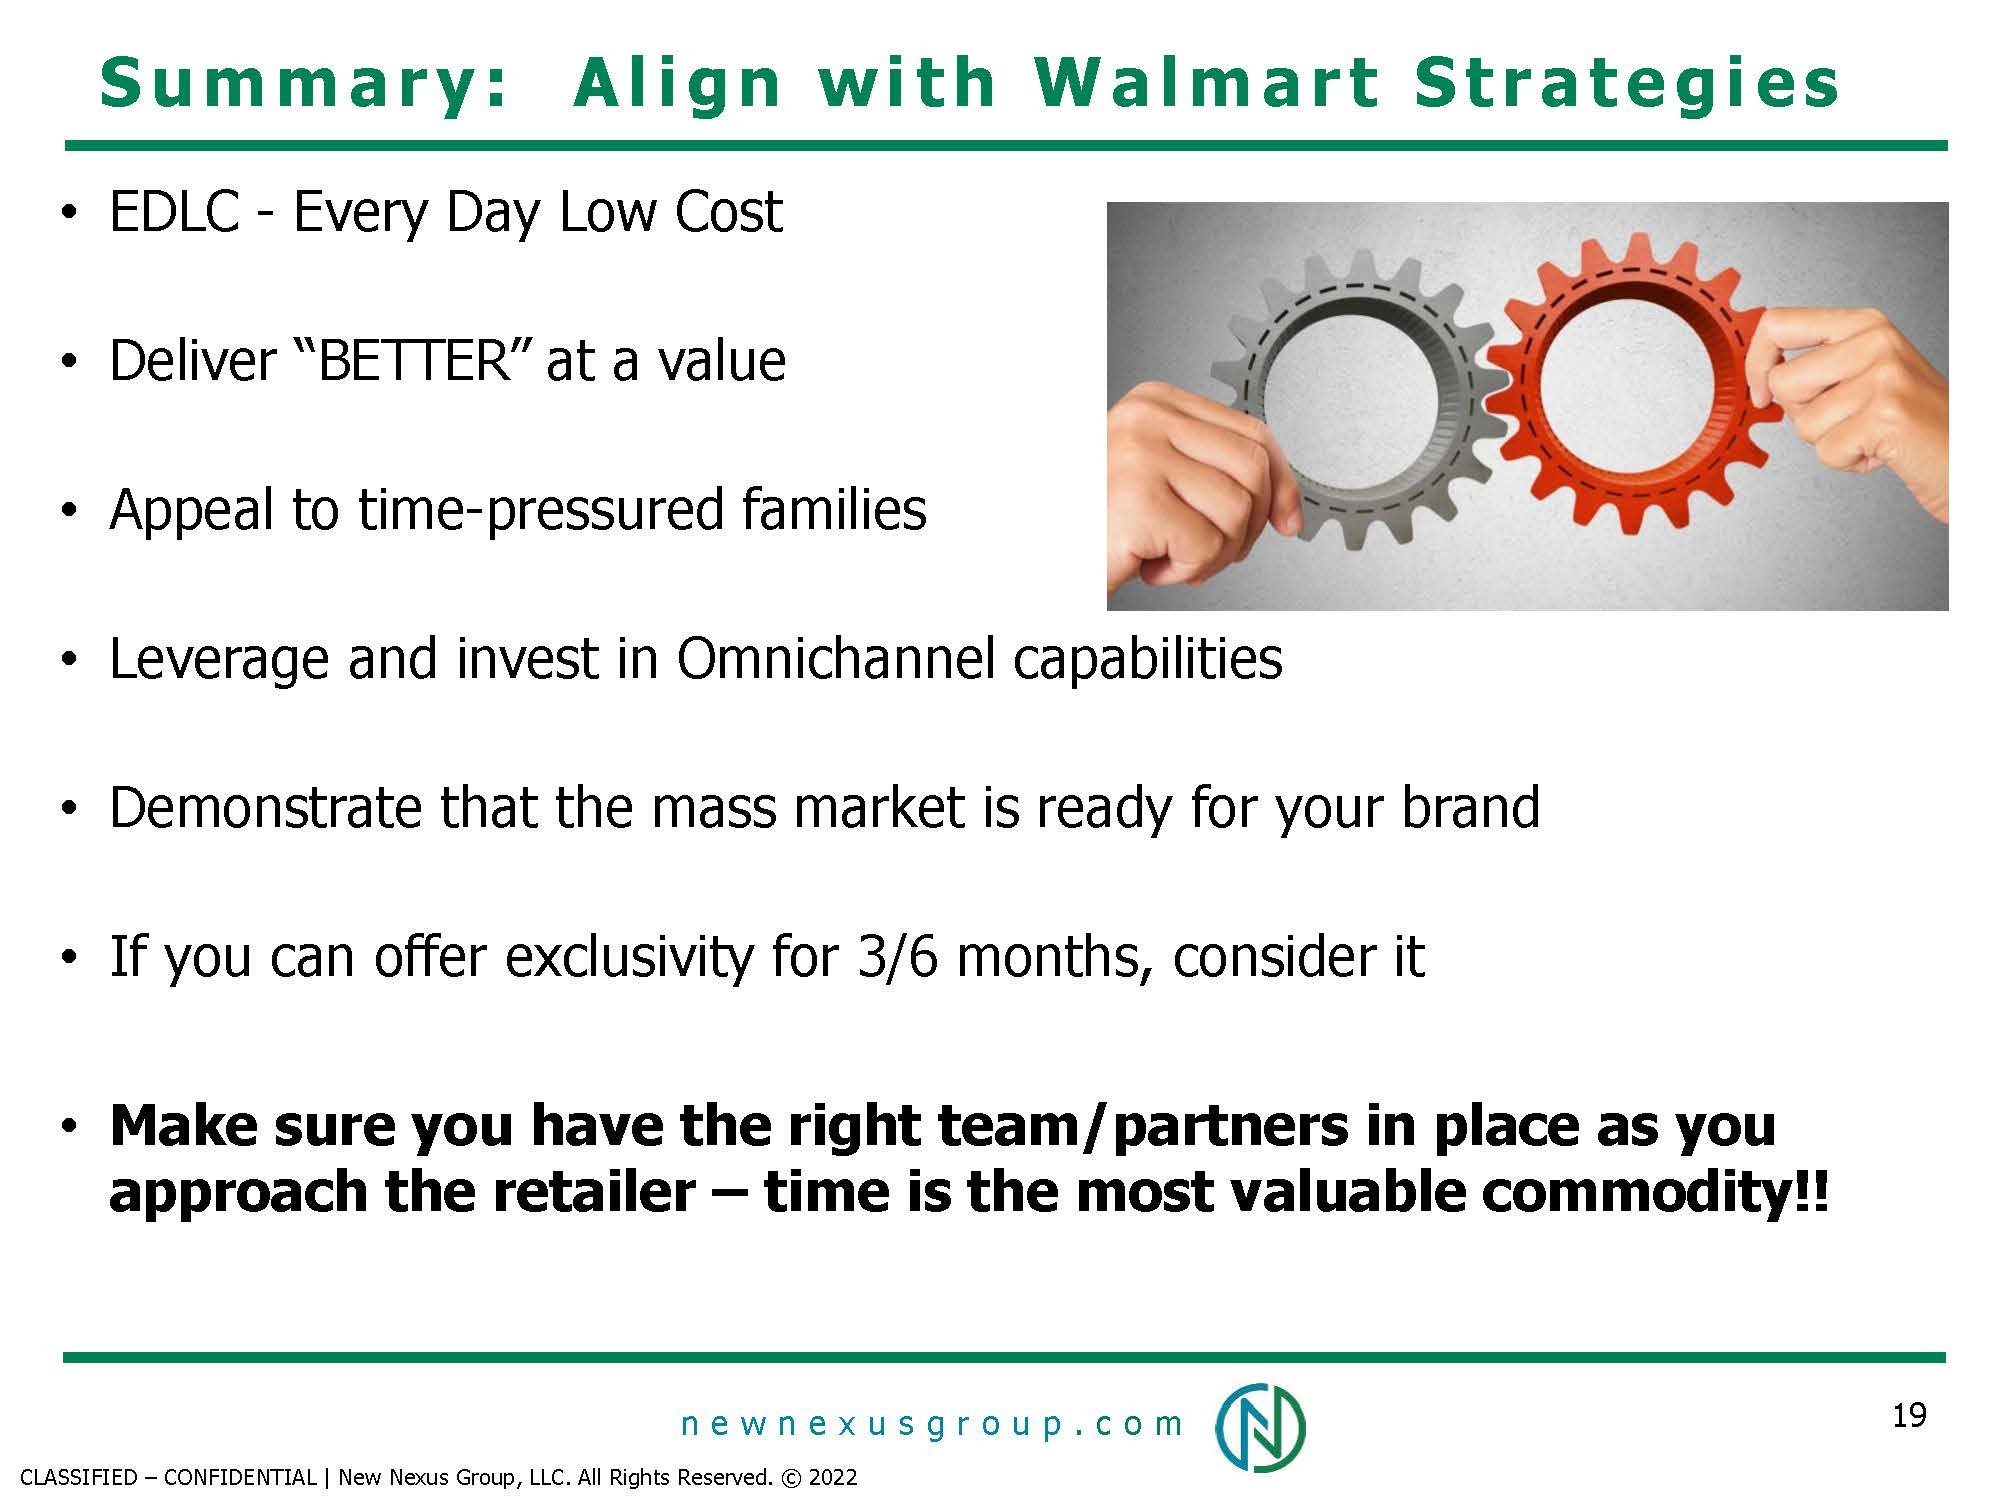 Austin M-O Fellowship Walmart 101 Presentation_07_22_22 (1)_Page_19.jpg